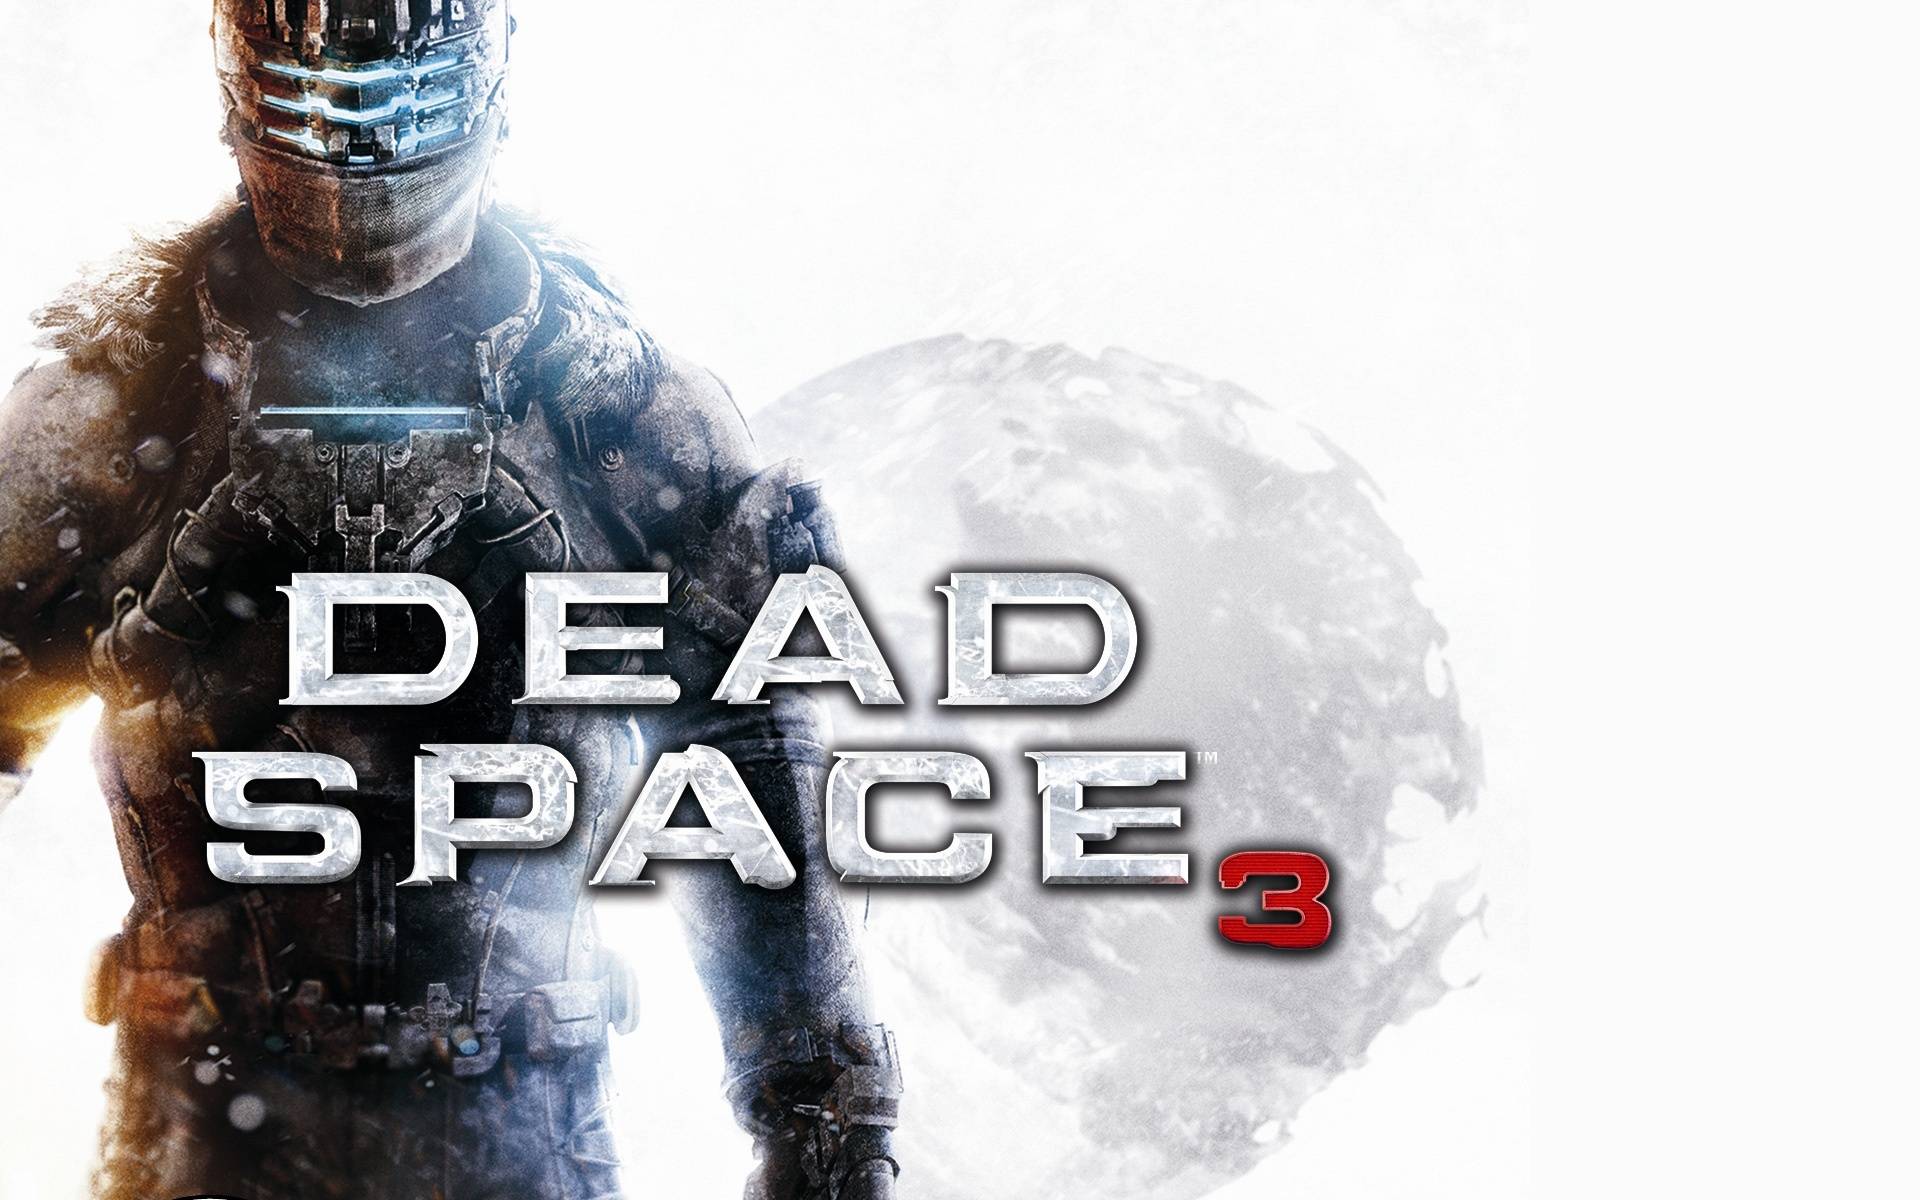 Dead Space 3 Wallpaper in HD « GamingBolt.com: Video Game News